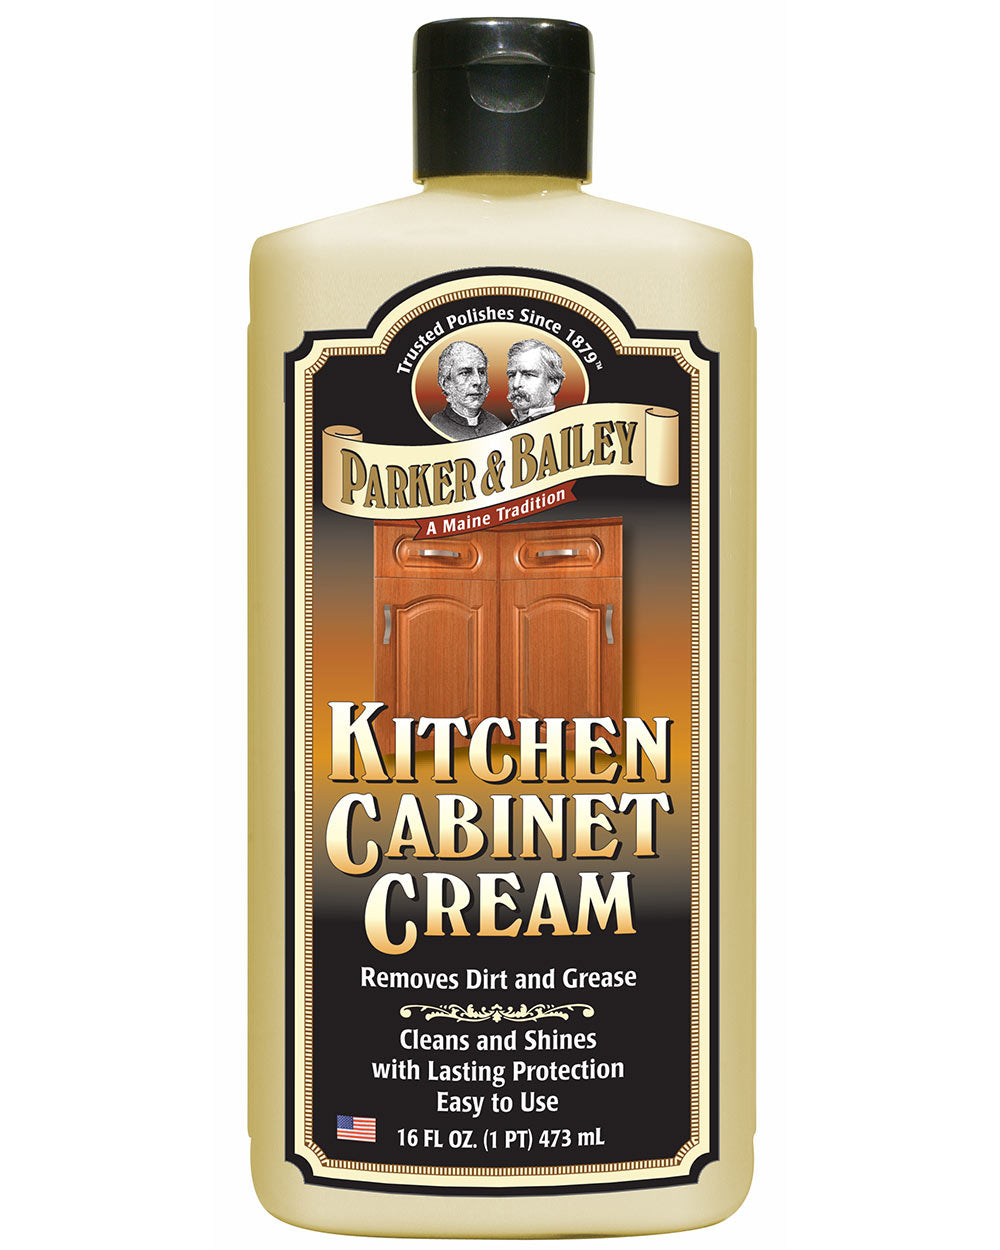 Kitchen cabinet cream Parker & Bailey 473ml on a white background